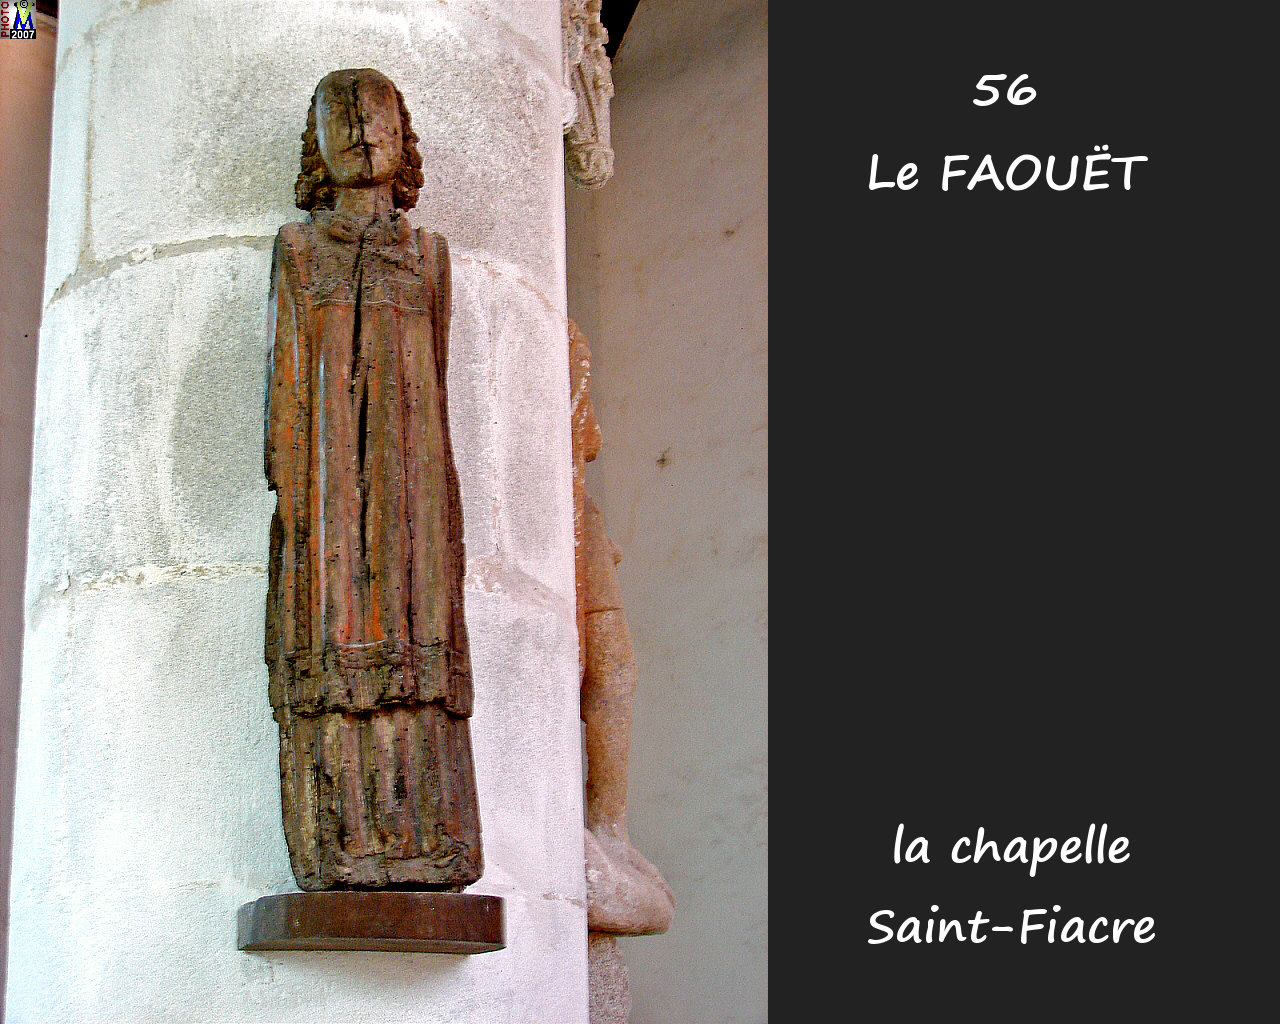 56FAOUET_chapelle-fiacre_322.jpg